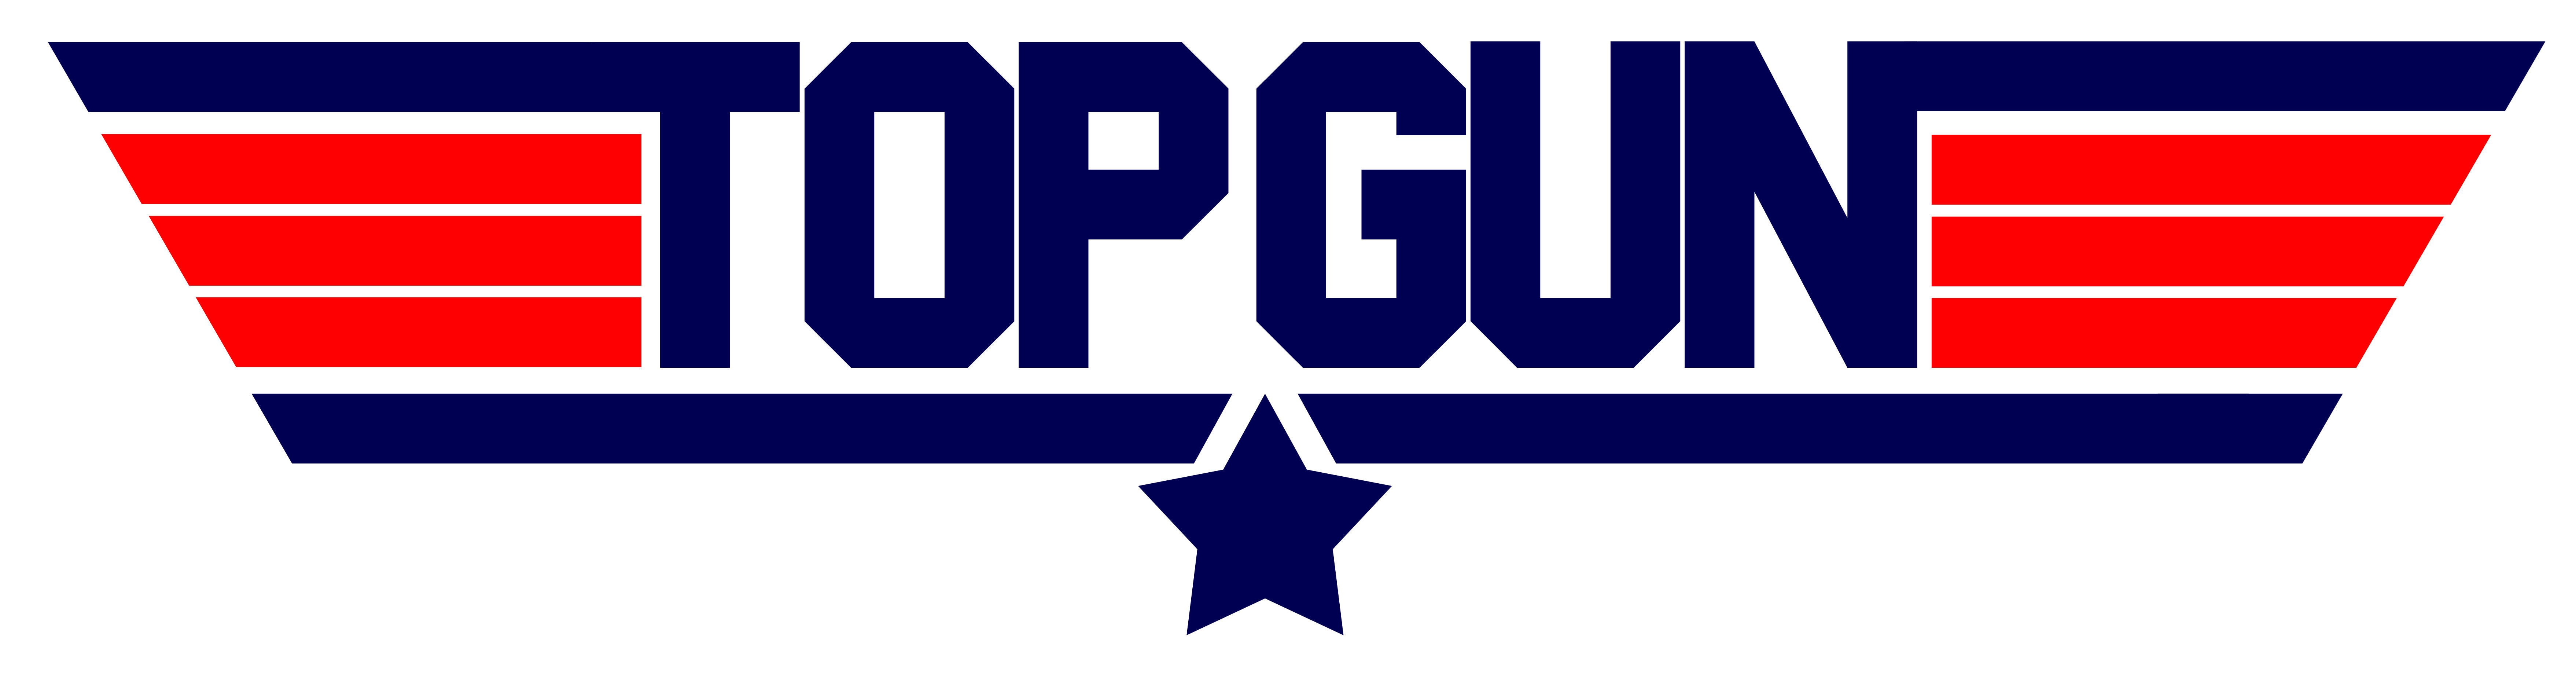 Top Gun Maverick Logo Background